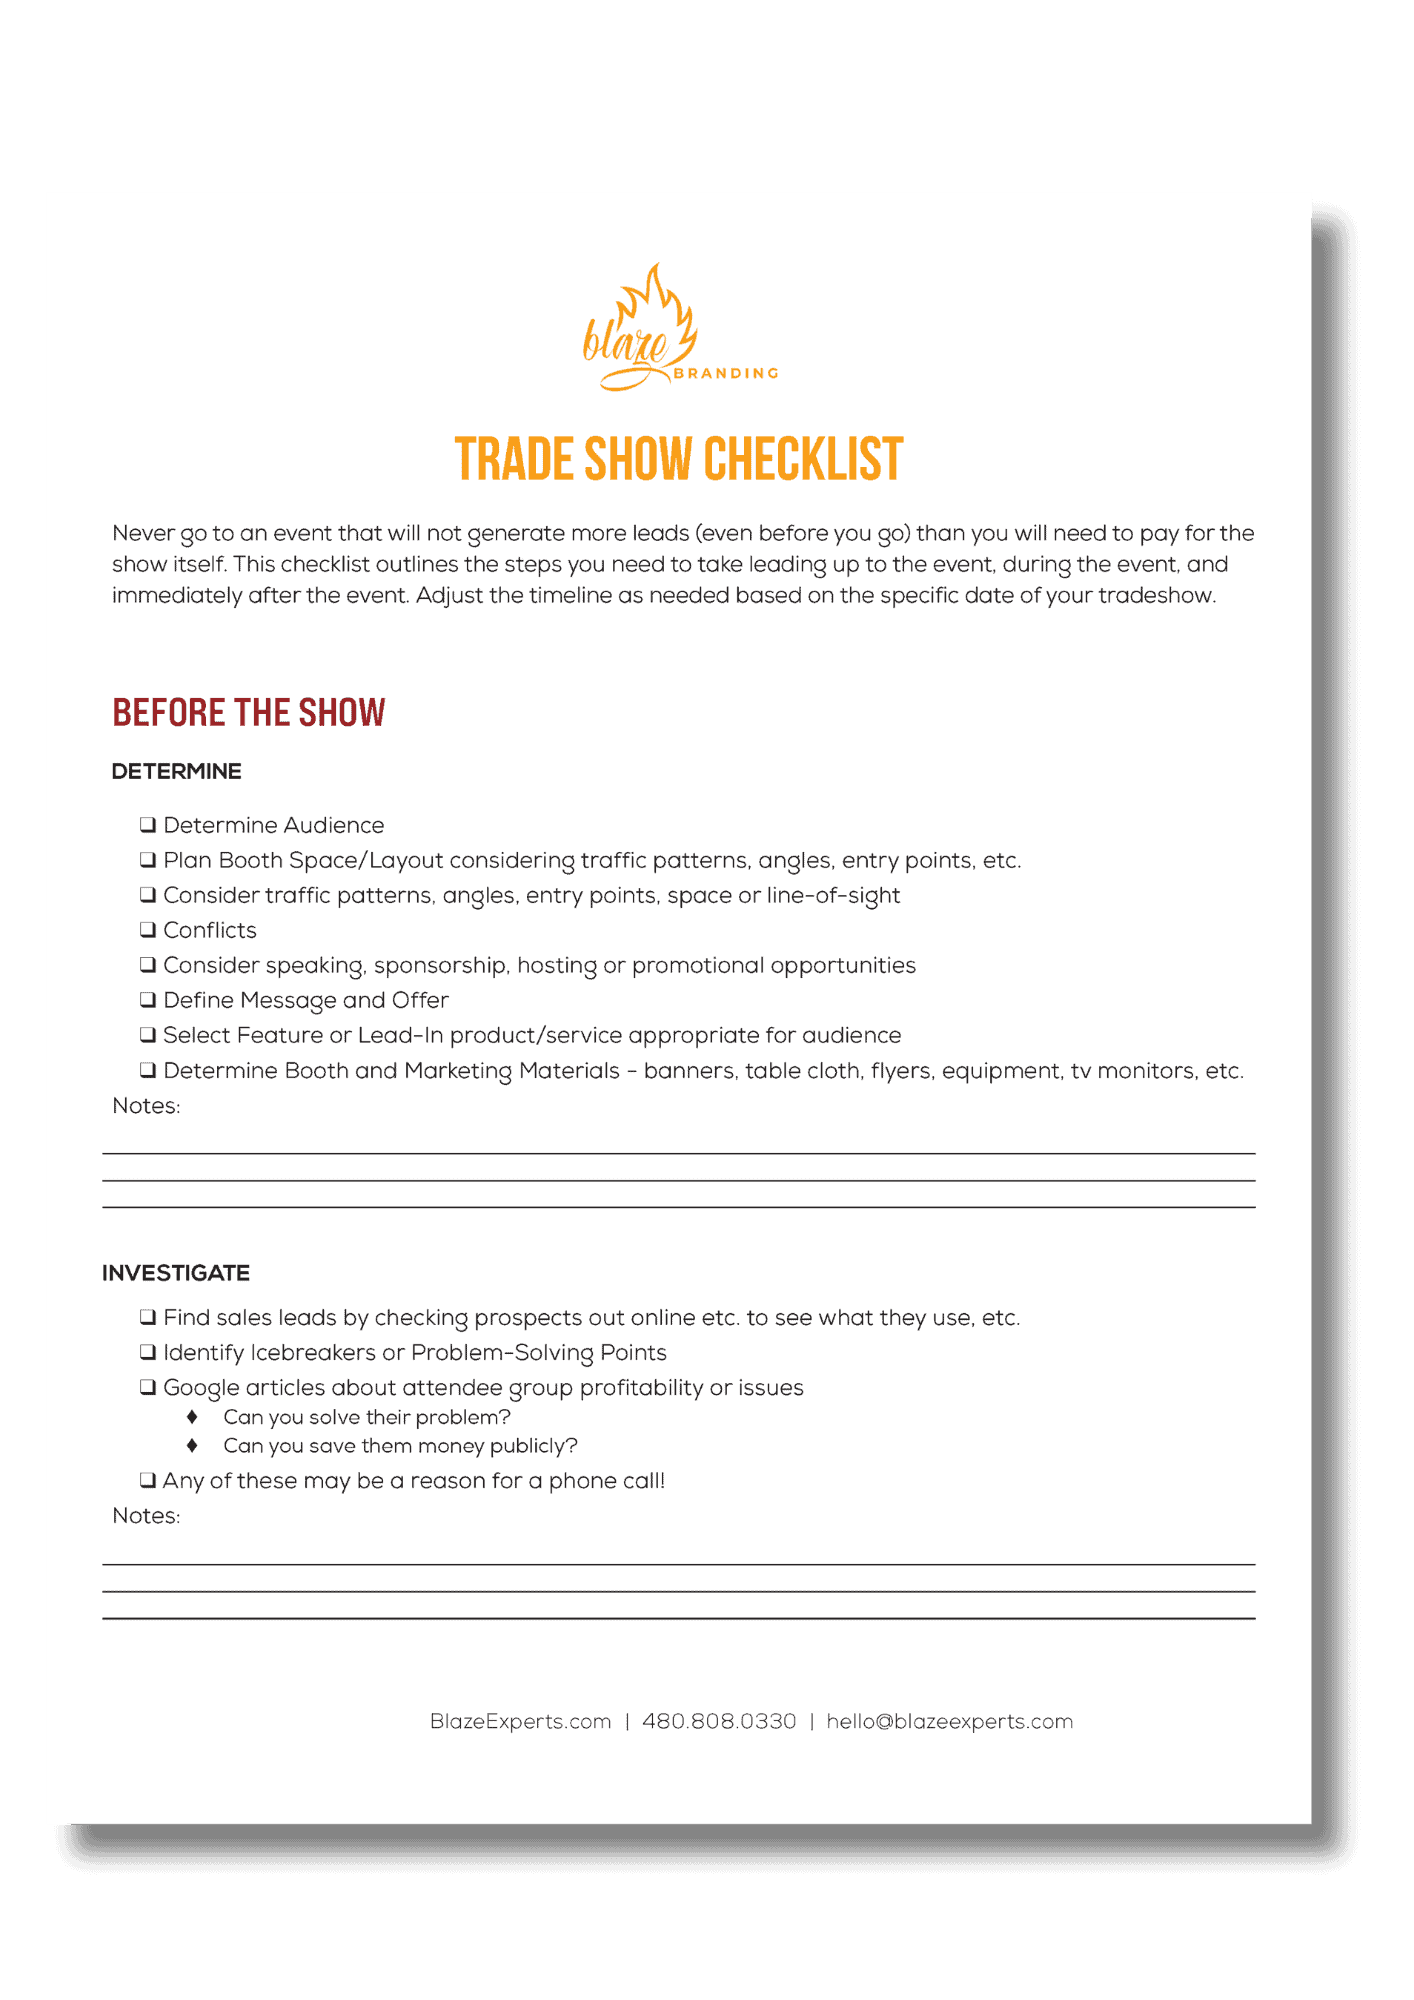 Trade show checklist mockup